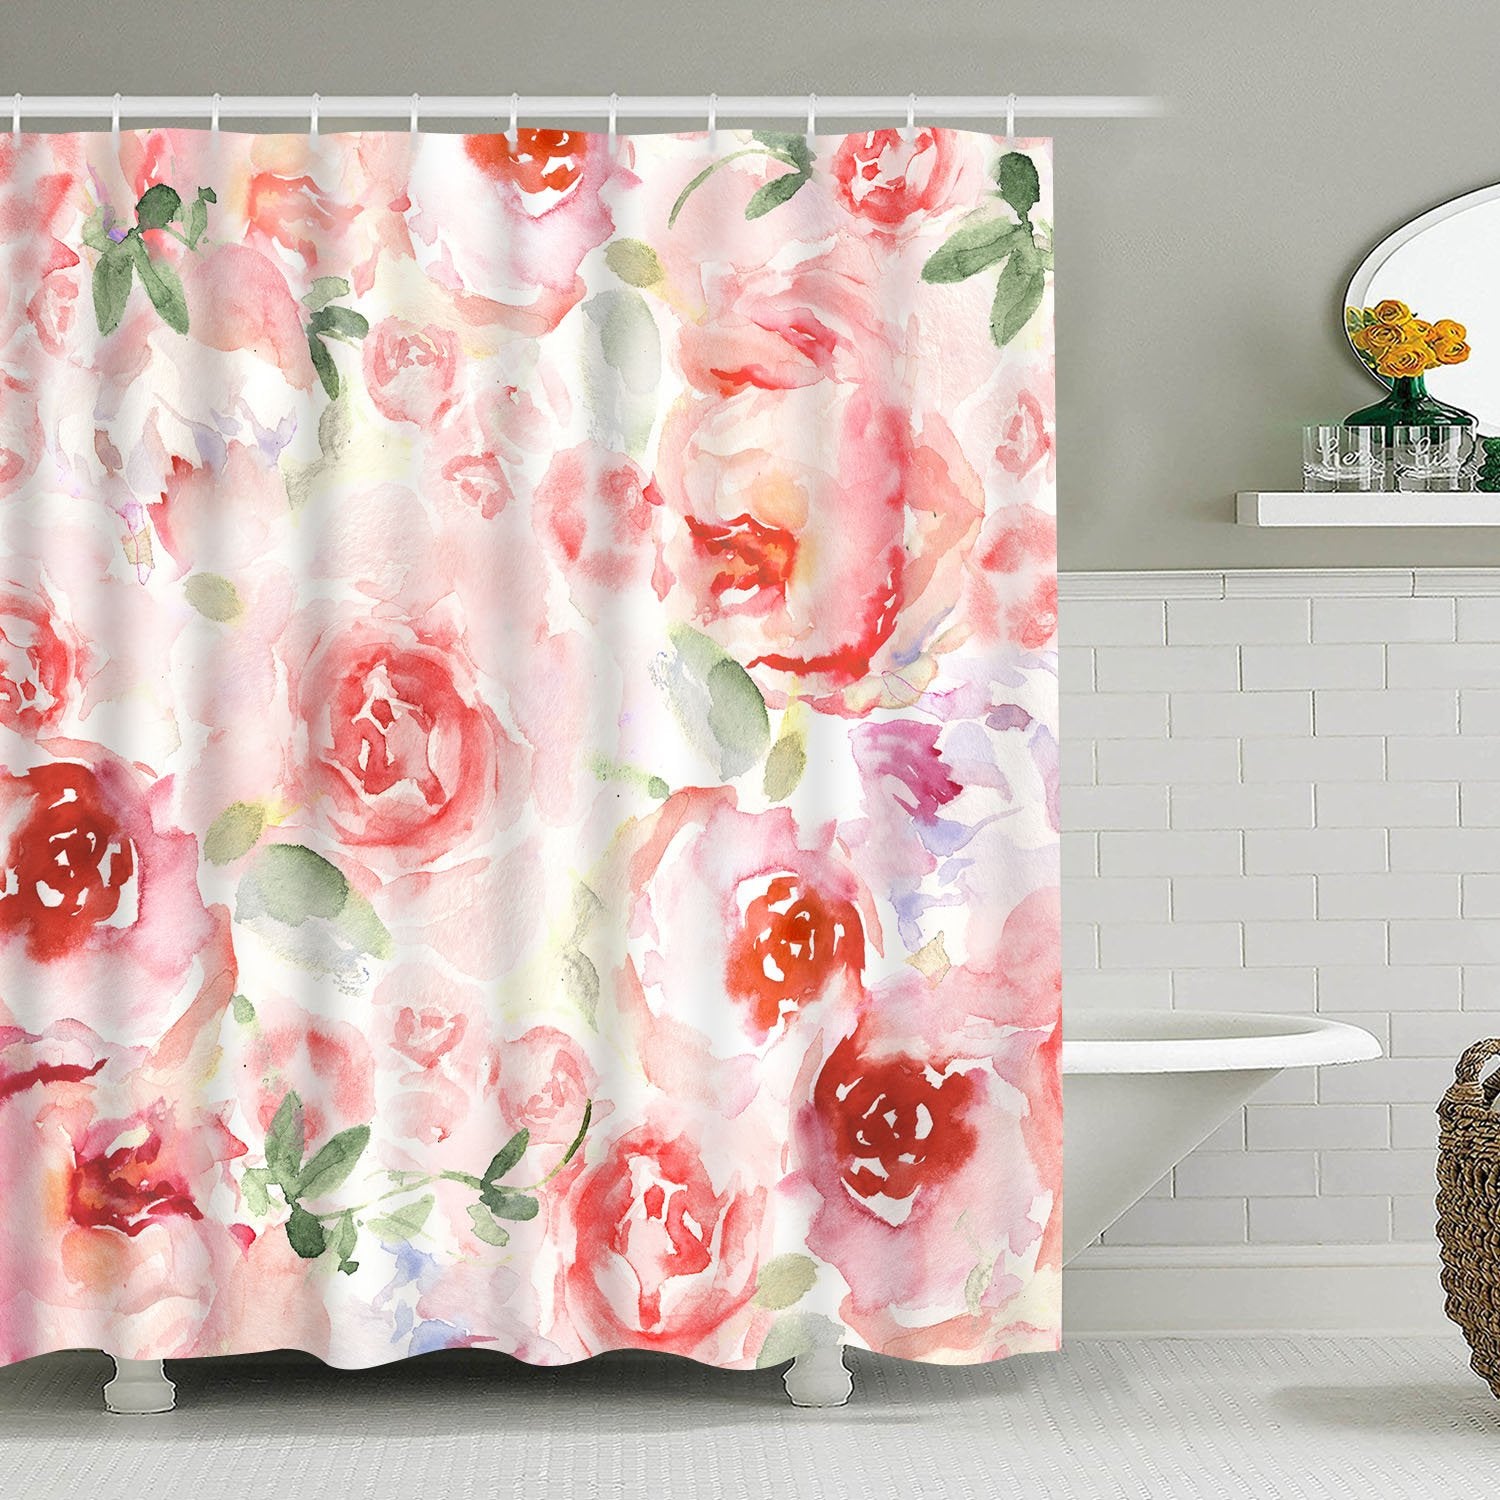 Bathroom Shower Curtain Romantic Watercolor Flowers Shower Curtains, Durable Fabric Bathroom Curtain Waterproof Bath Curtain Set with 12 Hooks